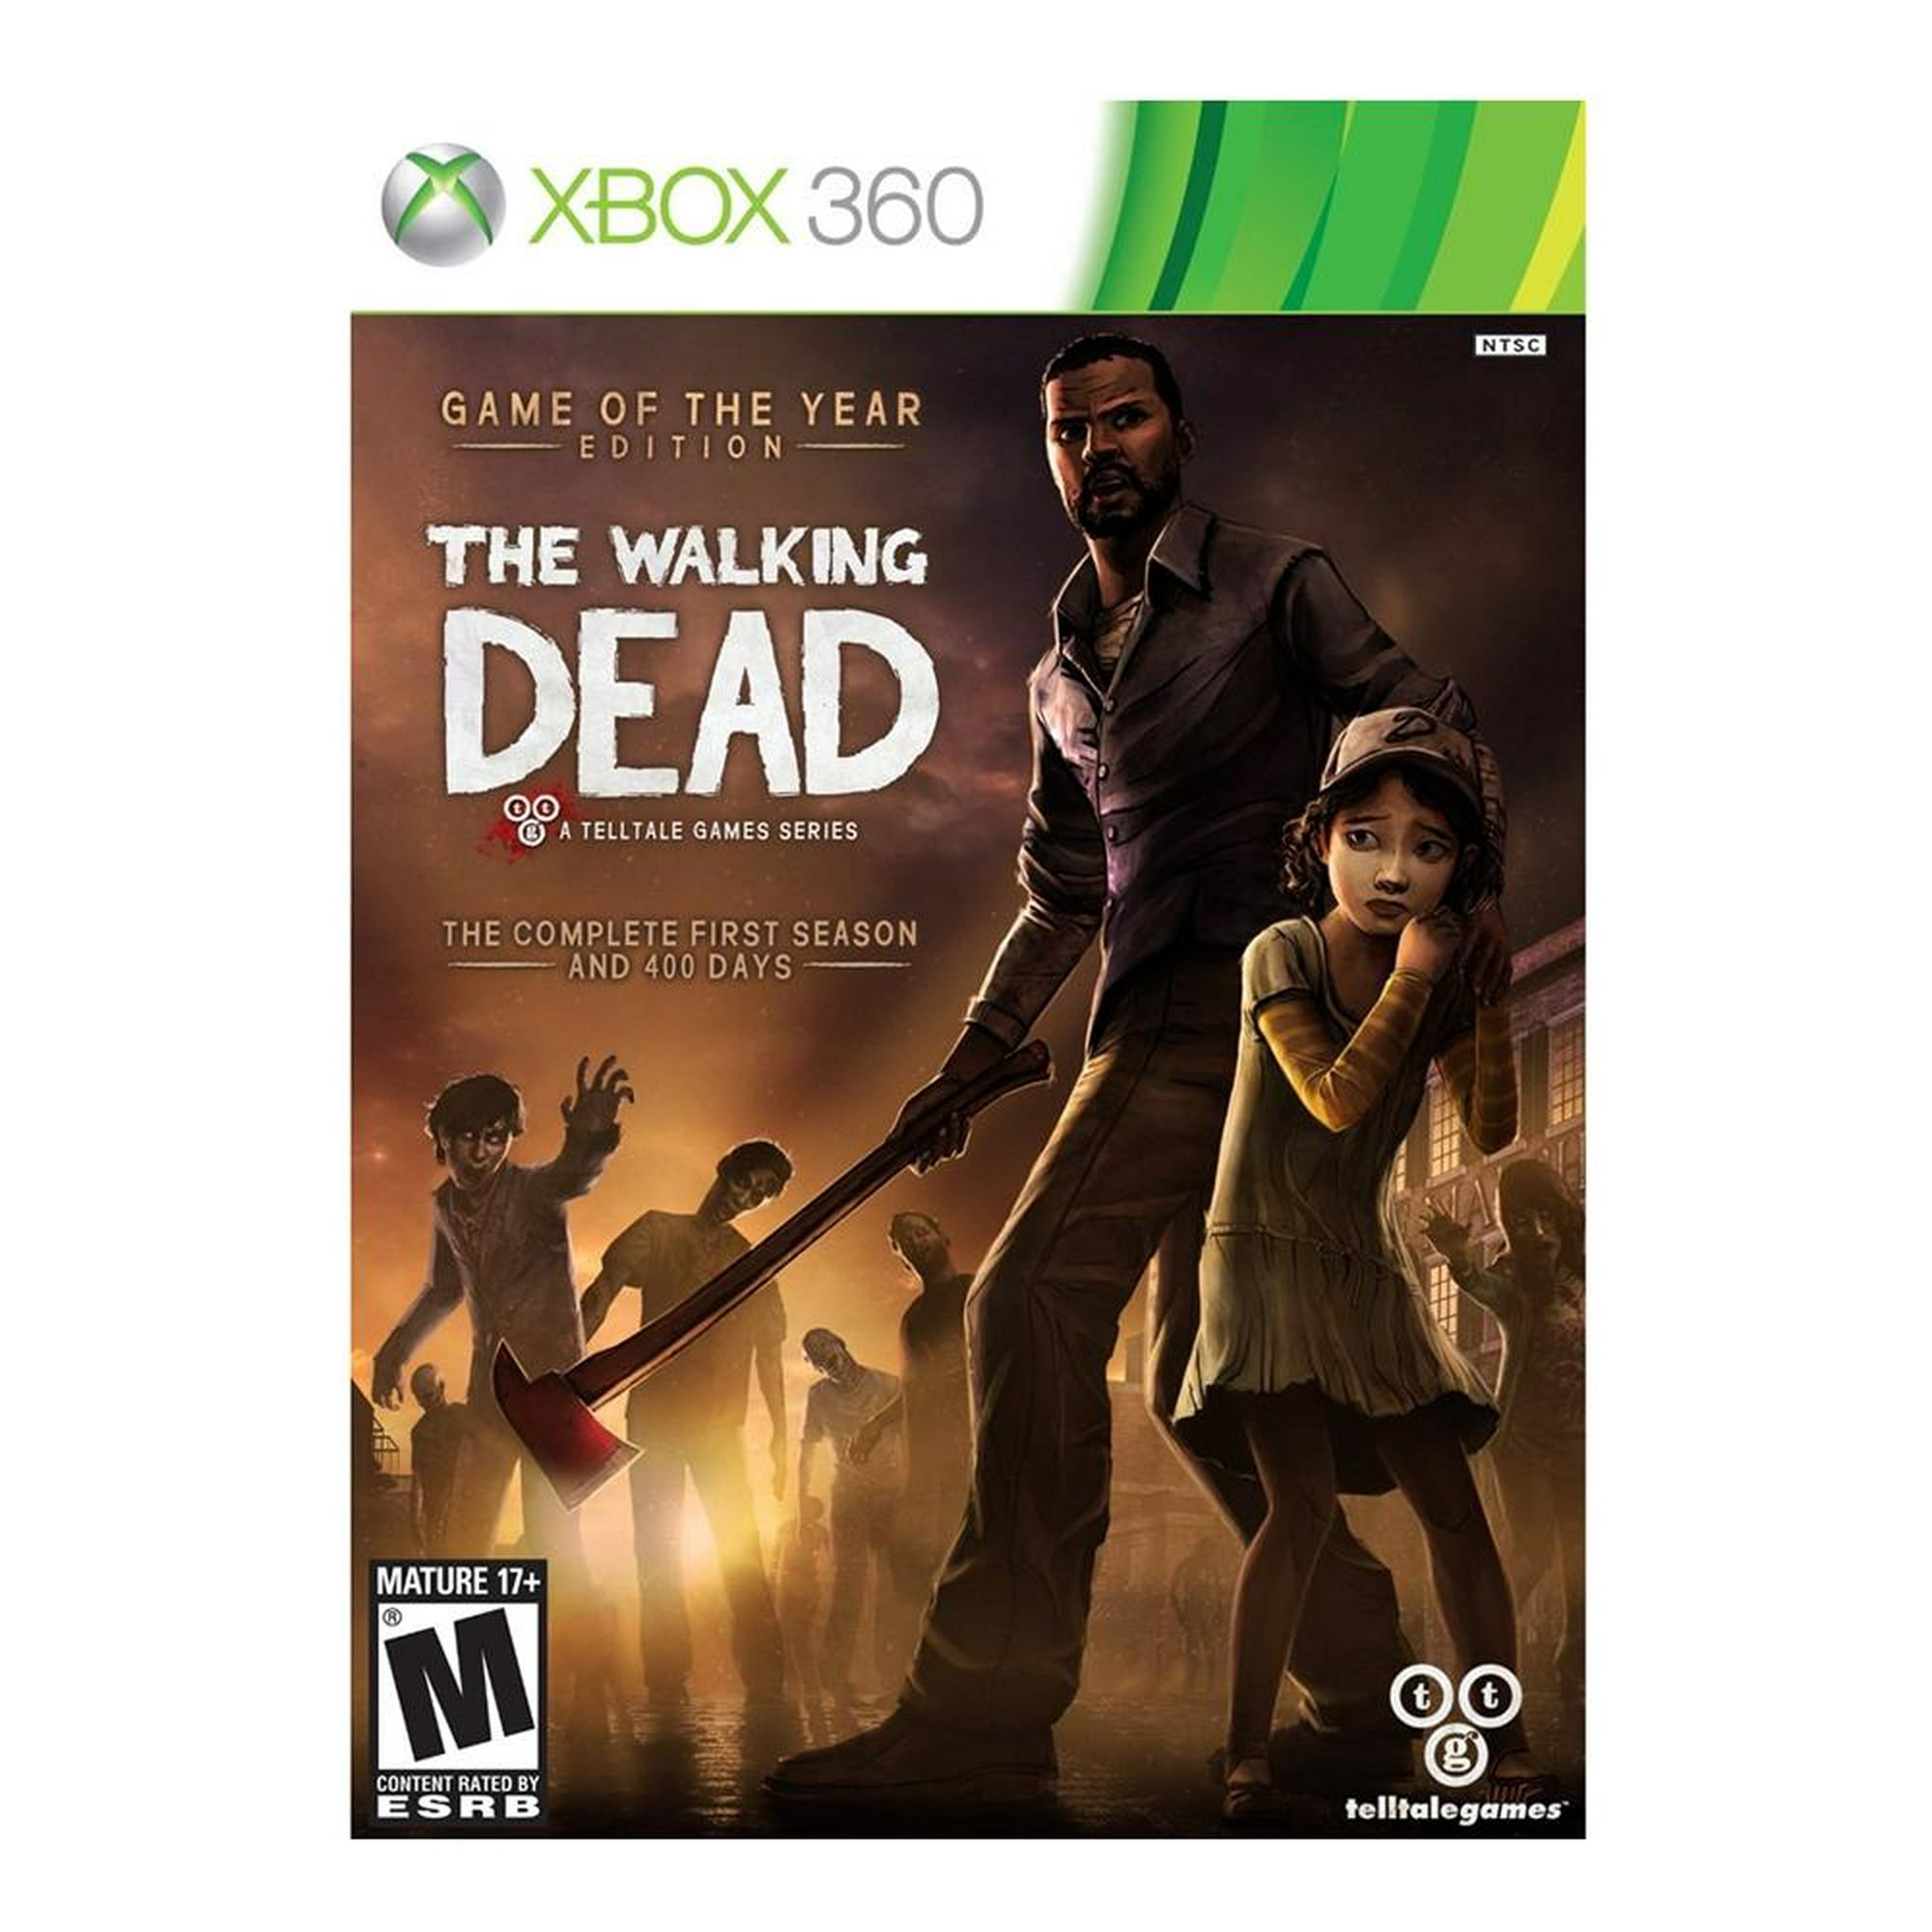 Destiny Standard Edition Activision Xbox 360 Físico